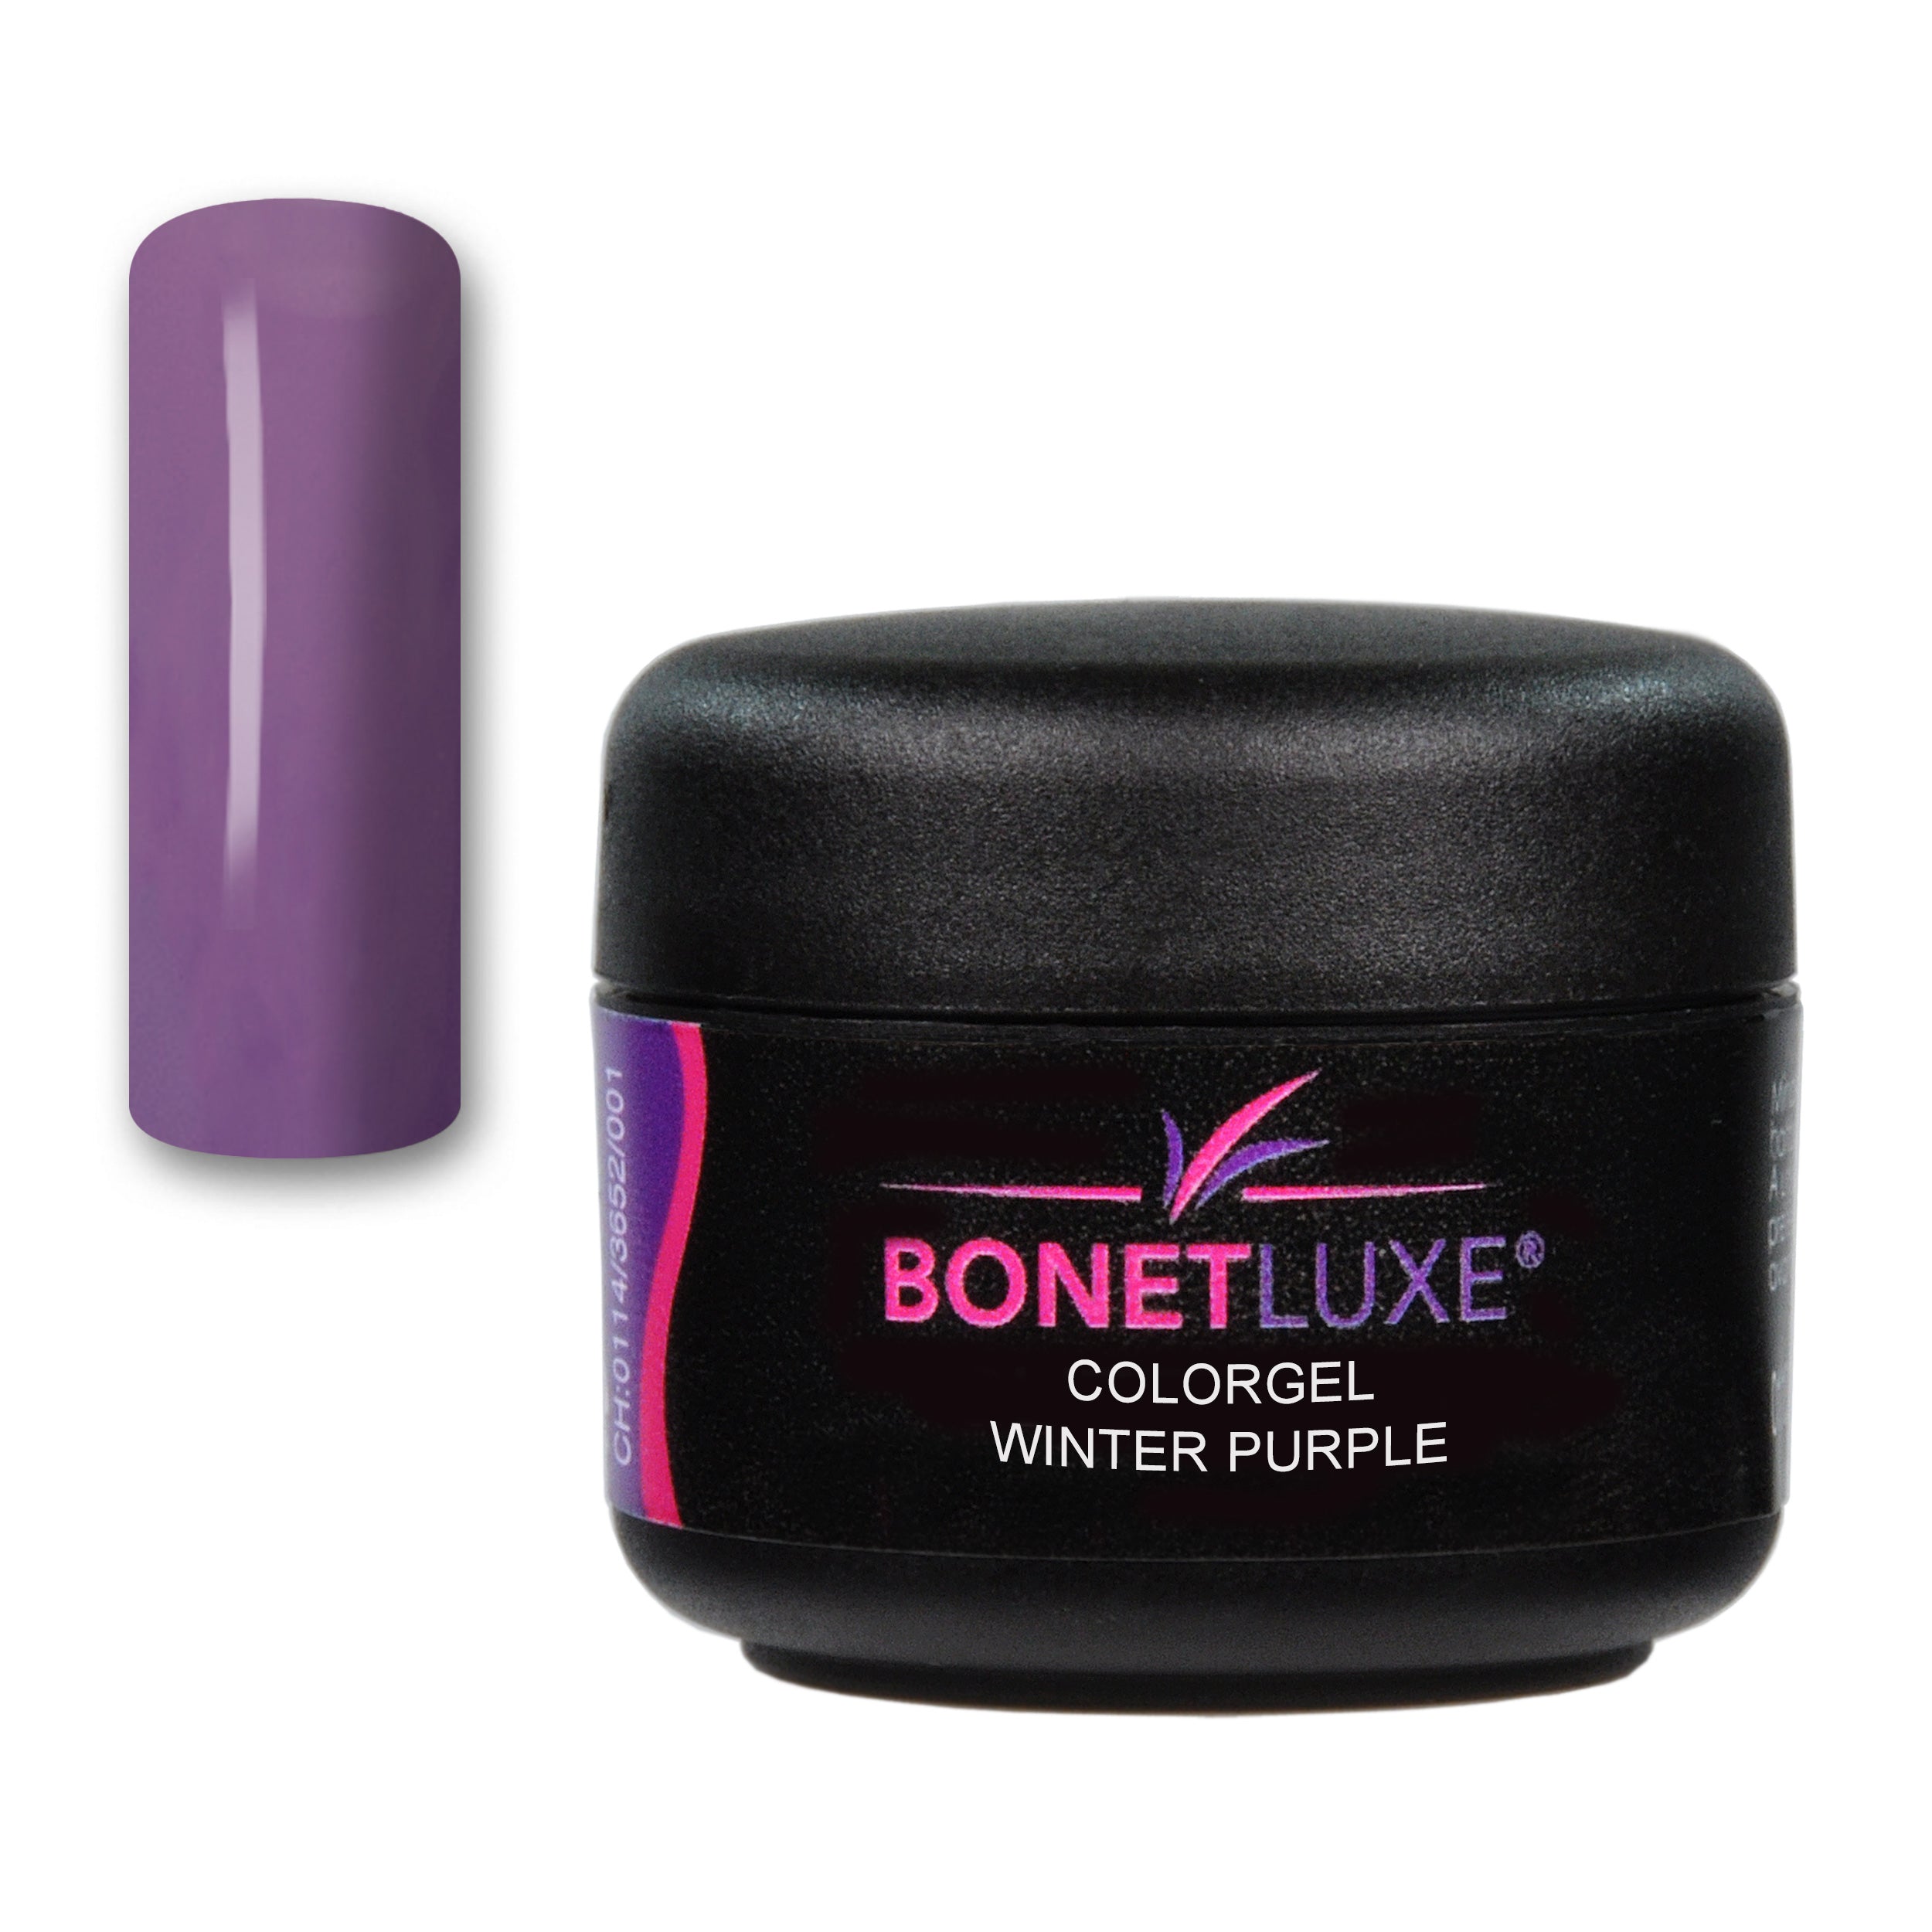 Bonetluxe Colorgel Winter Purple